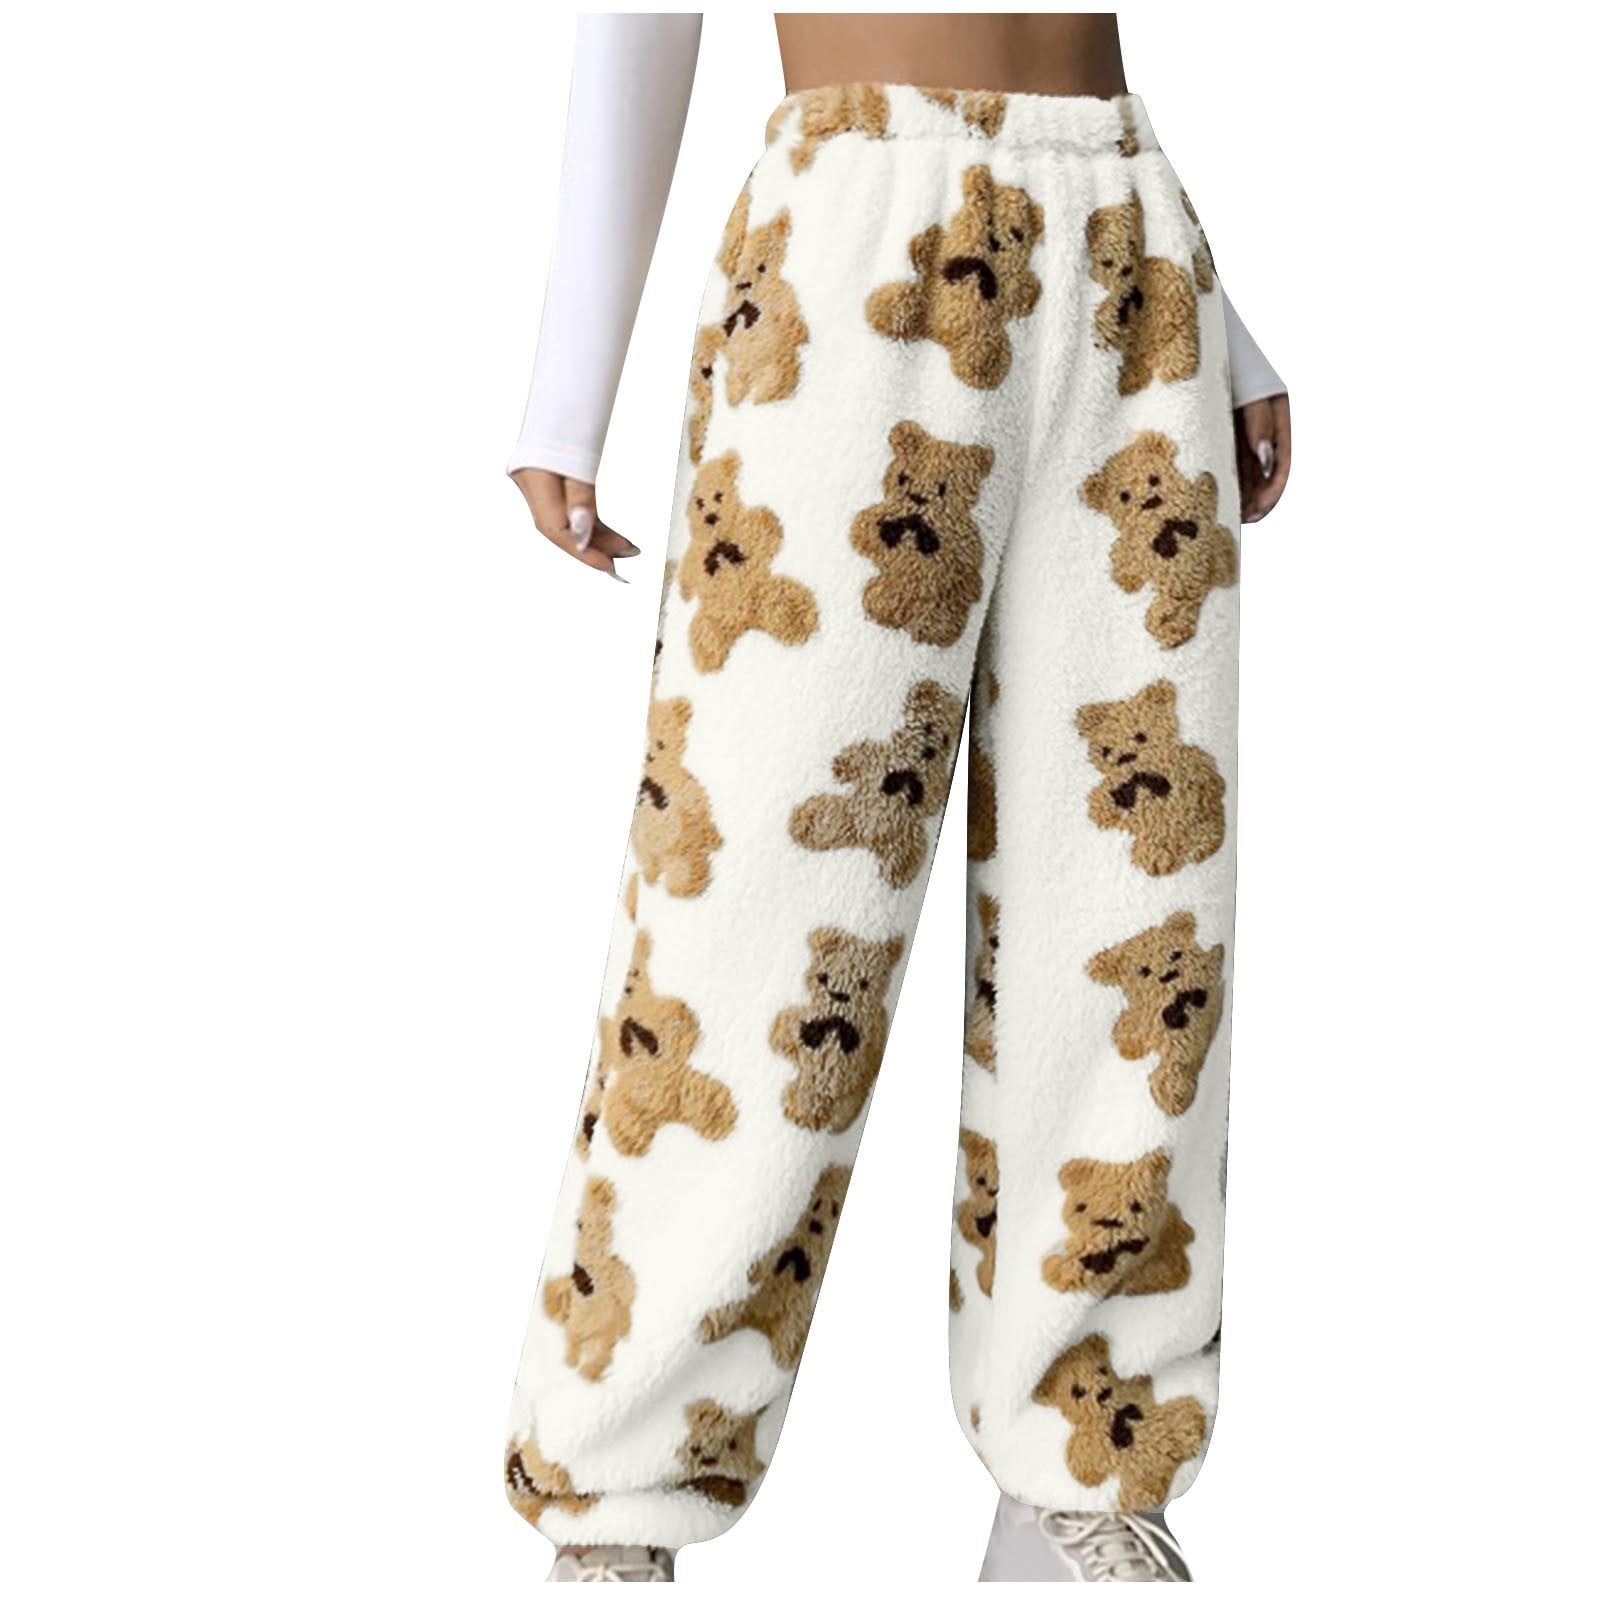 RYRJJ Women's Winter Warm Fleece Pajama Pants Plus Size Cute Bear Print  Baggy Sweatpants Fuzzy Jogger Lounge Pants Sleepwear with Pockets White S